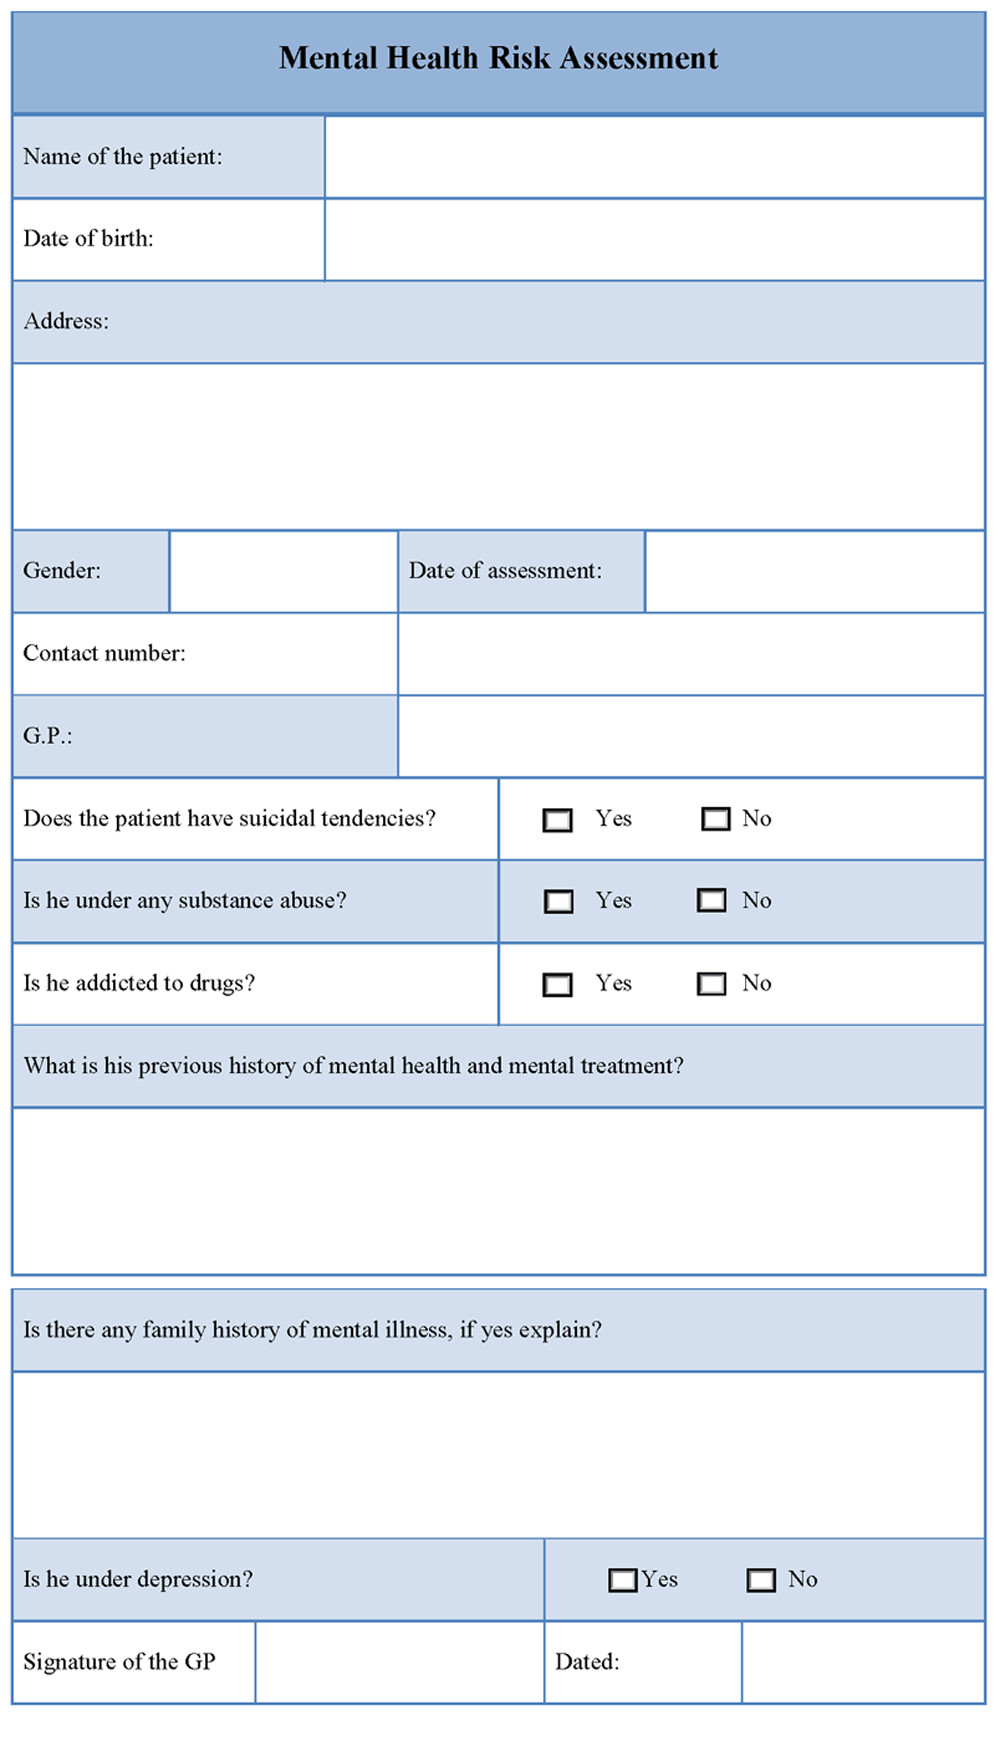 Mental Health assessment Template assessment Template for Mental Health Risk Sample Of